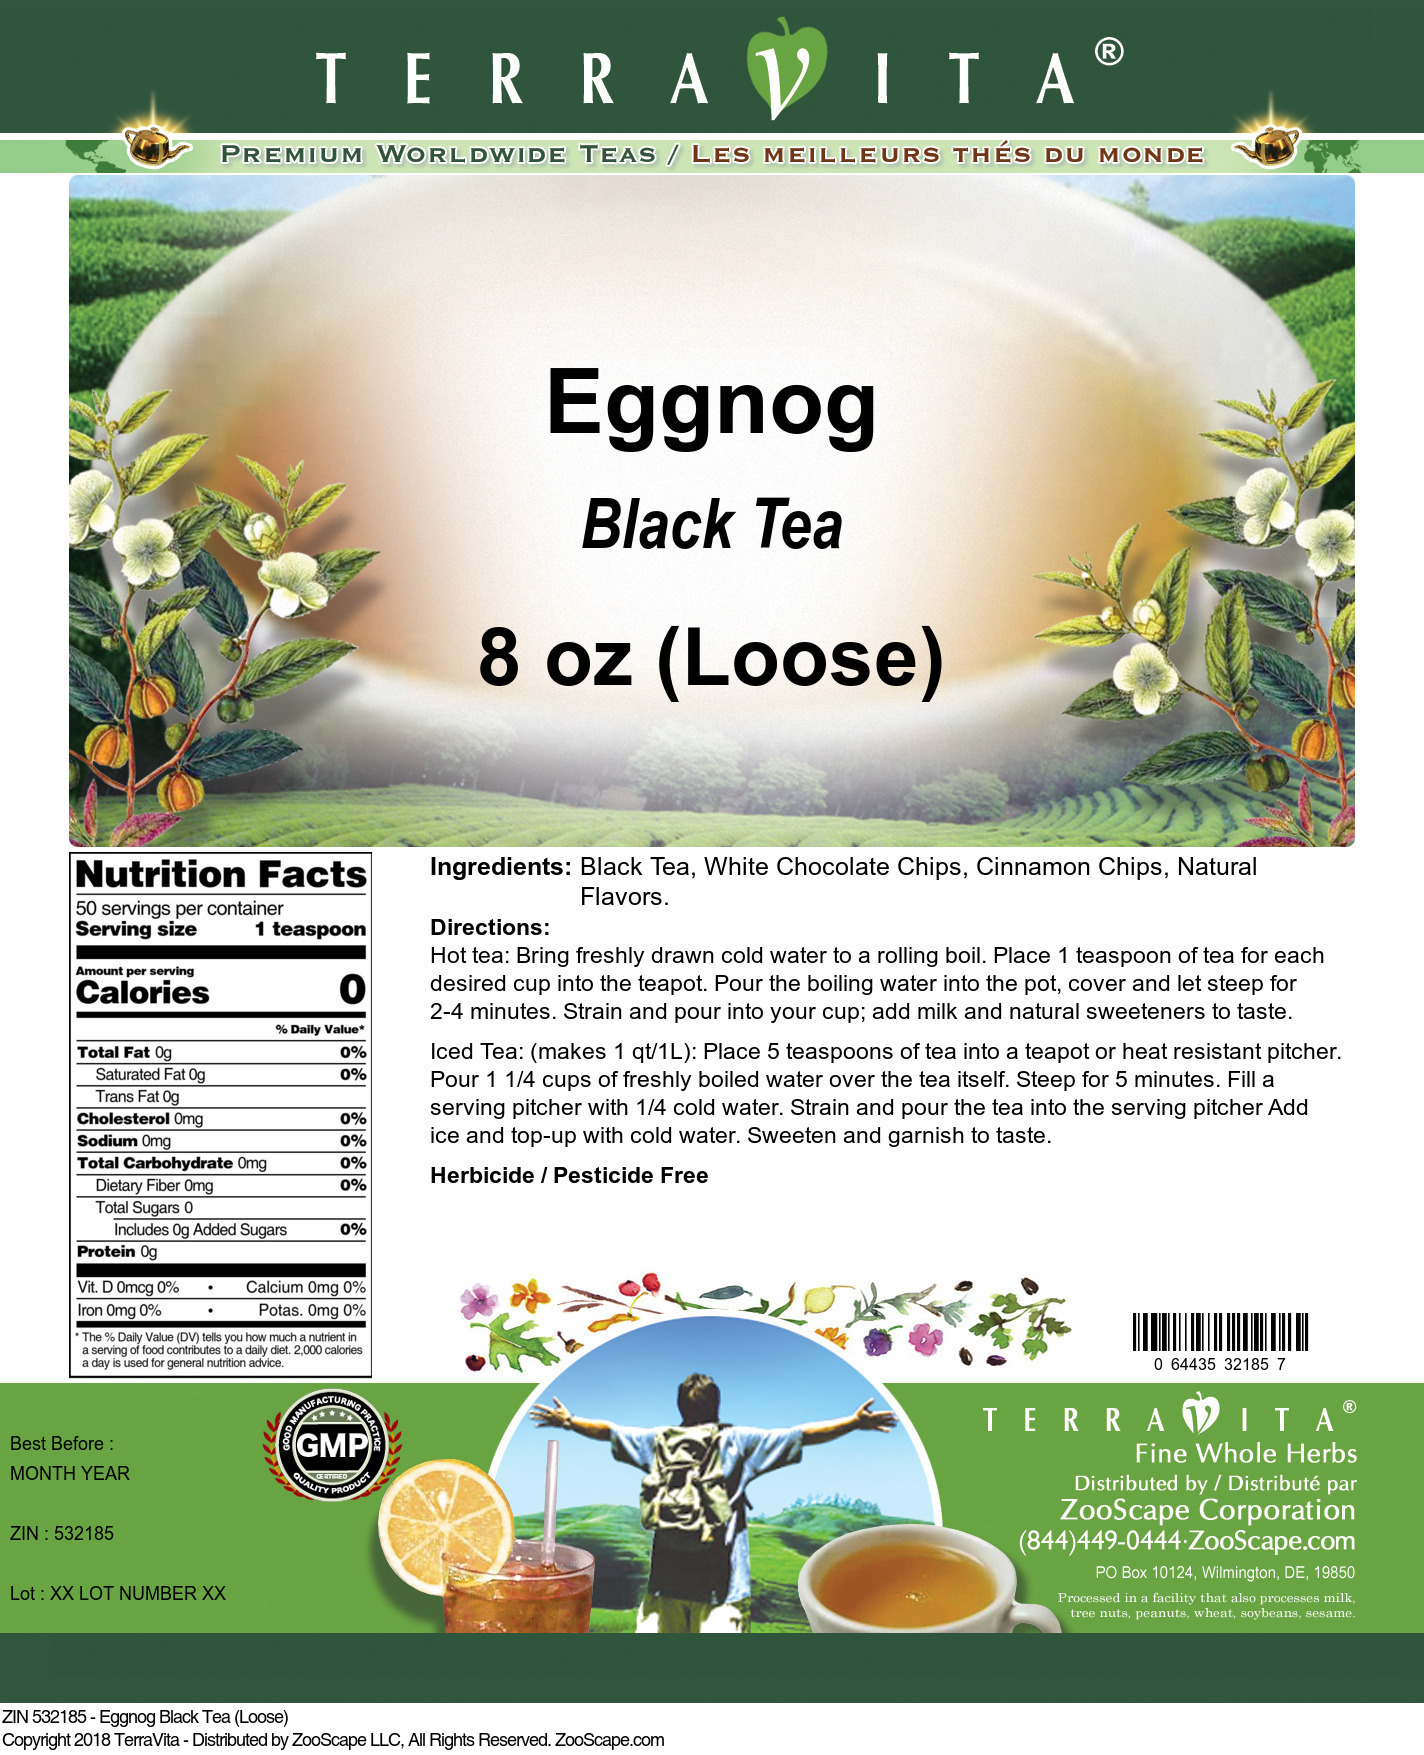 Eggnog Black Tea (Loose) - Label